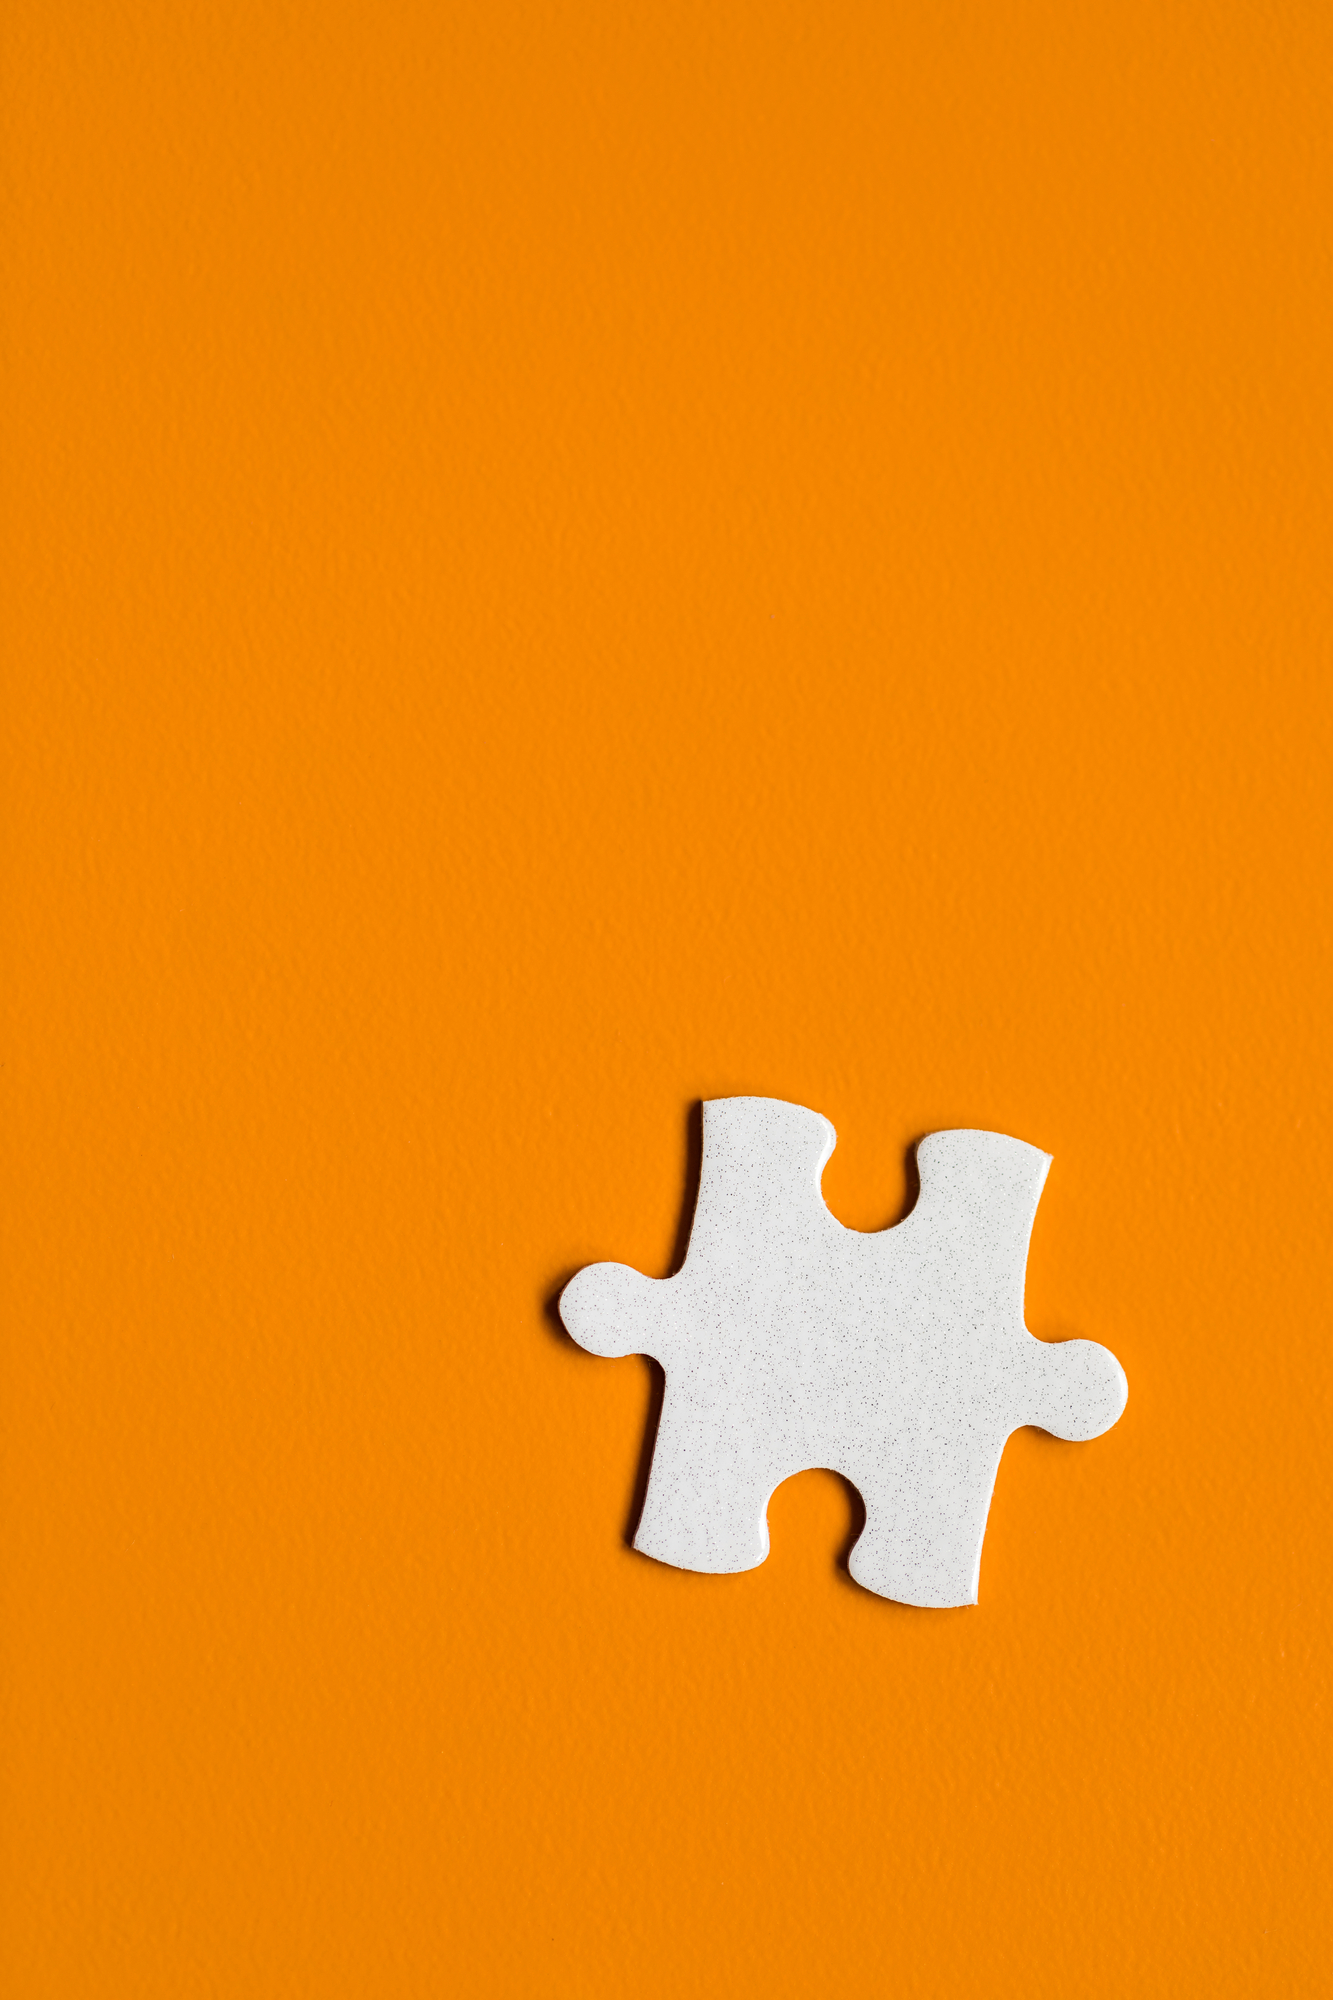 orange background with single puzzle piece